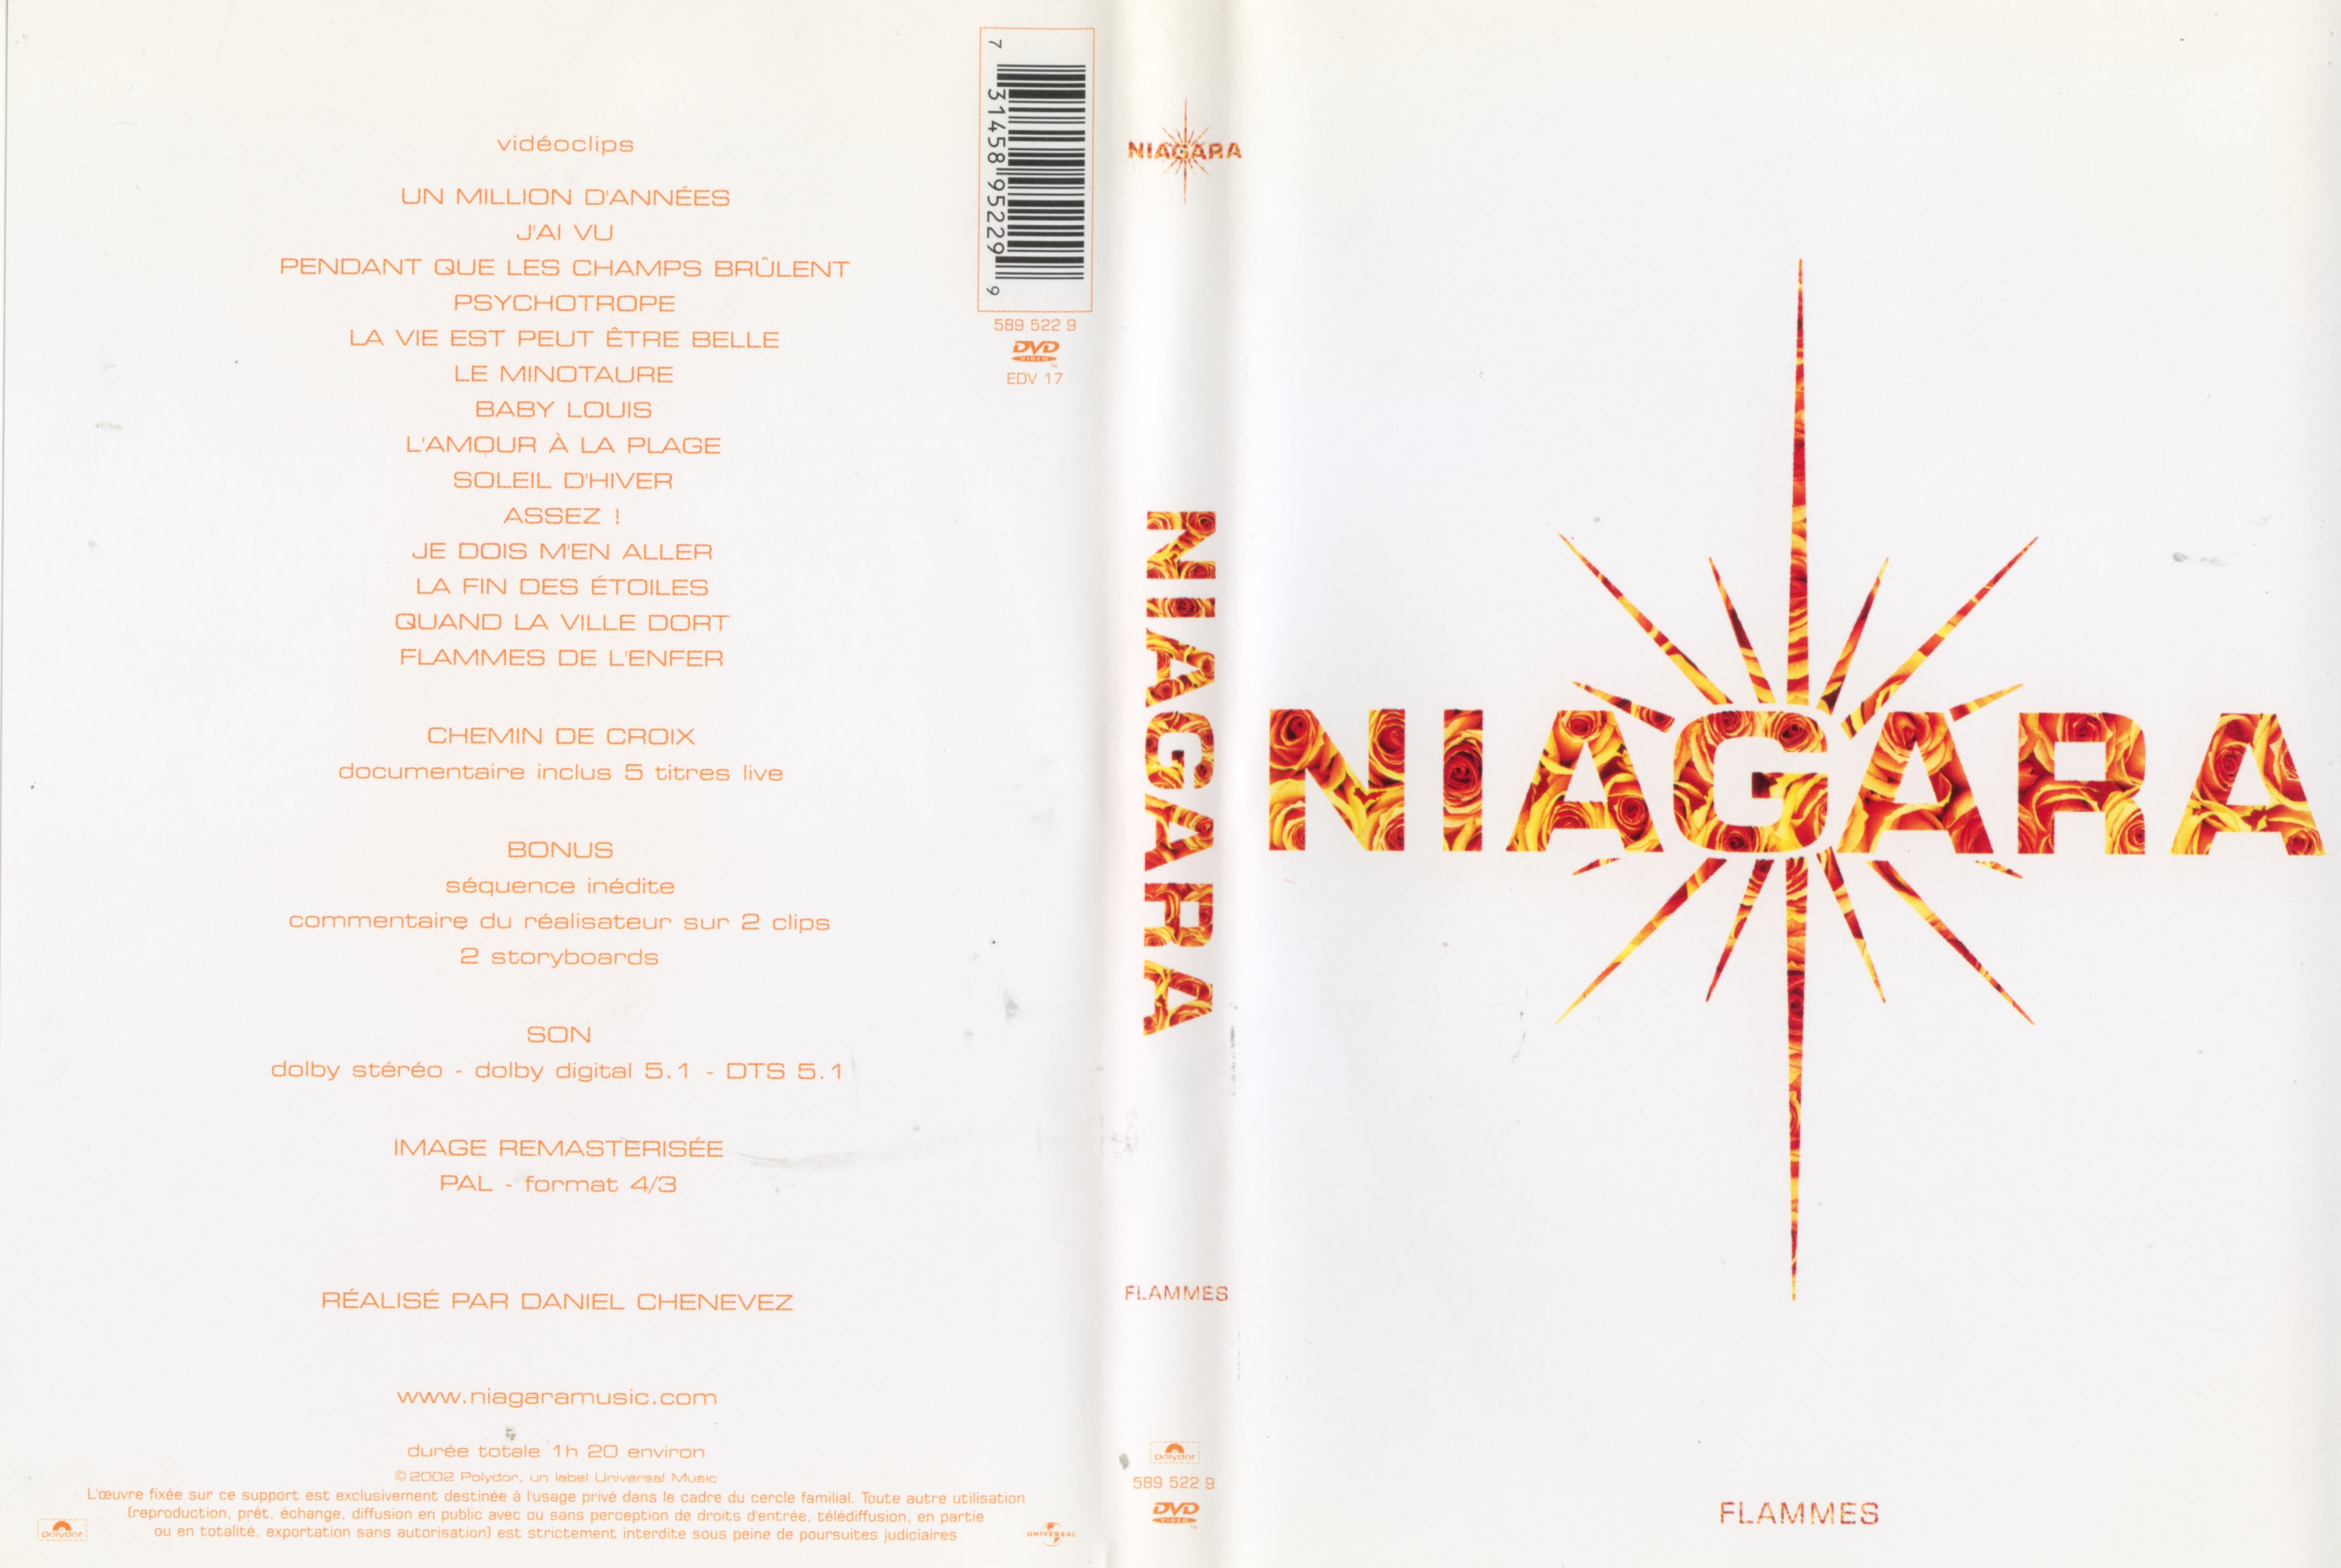 Jaquette DVD Niagara - Flammes